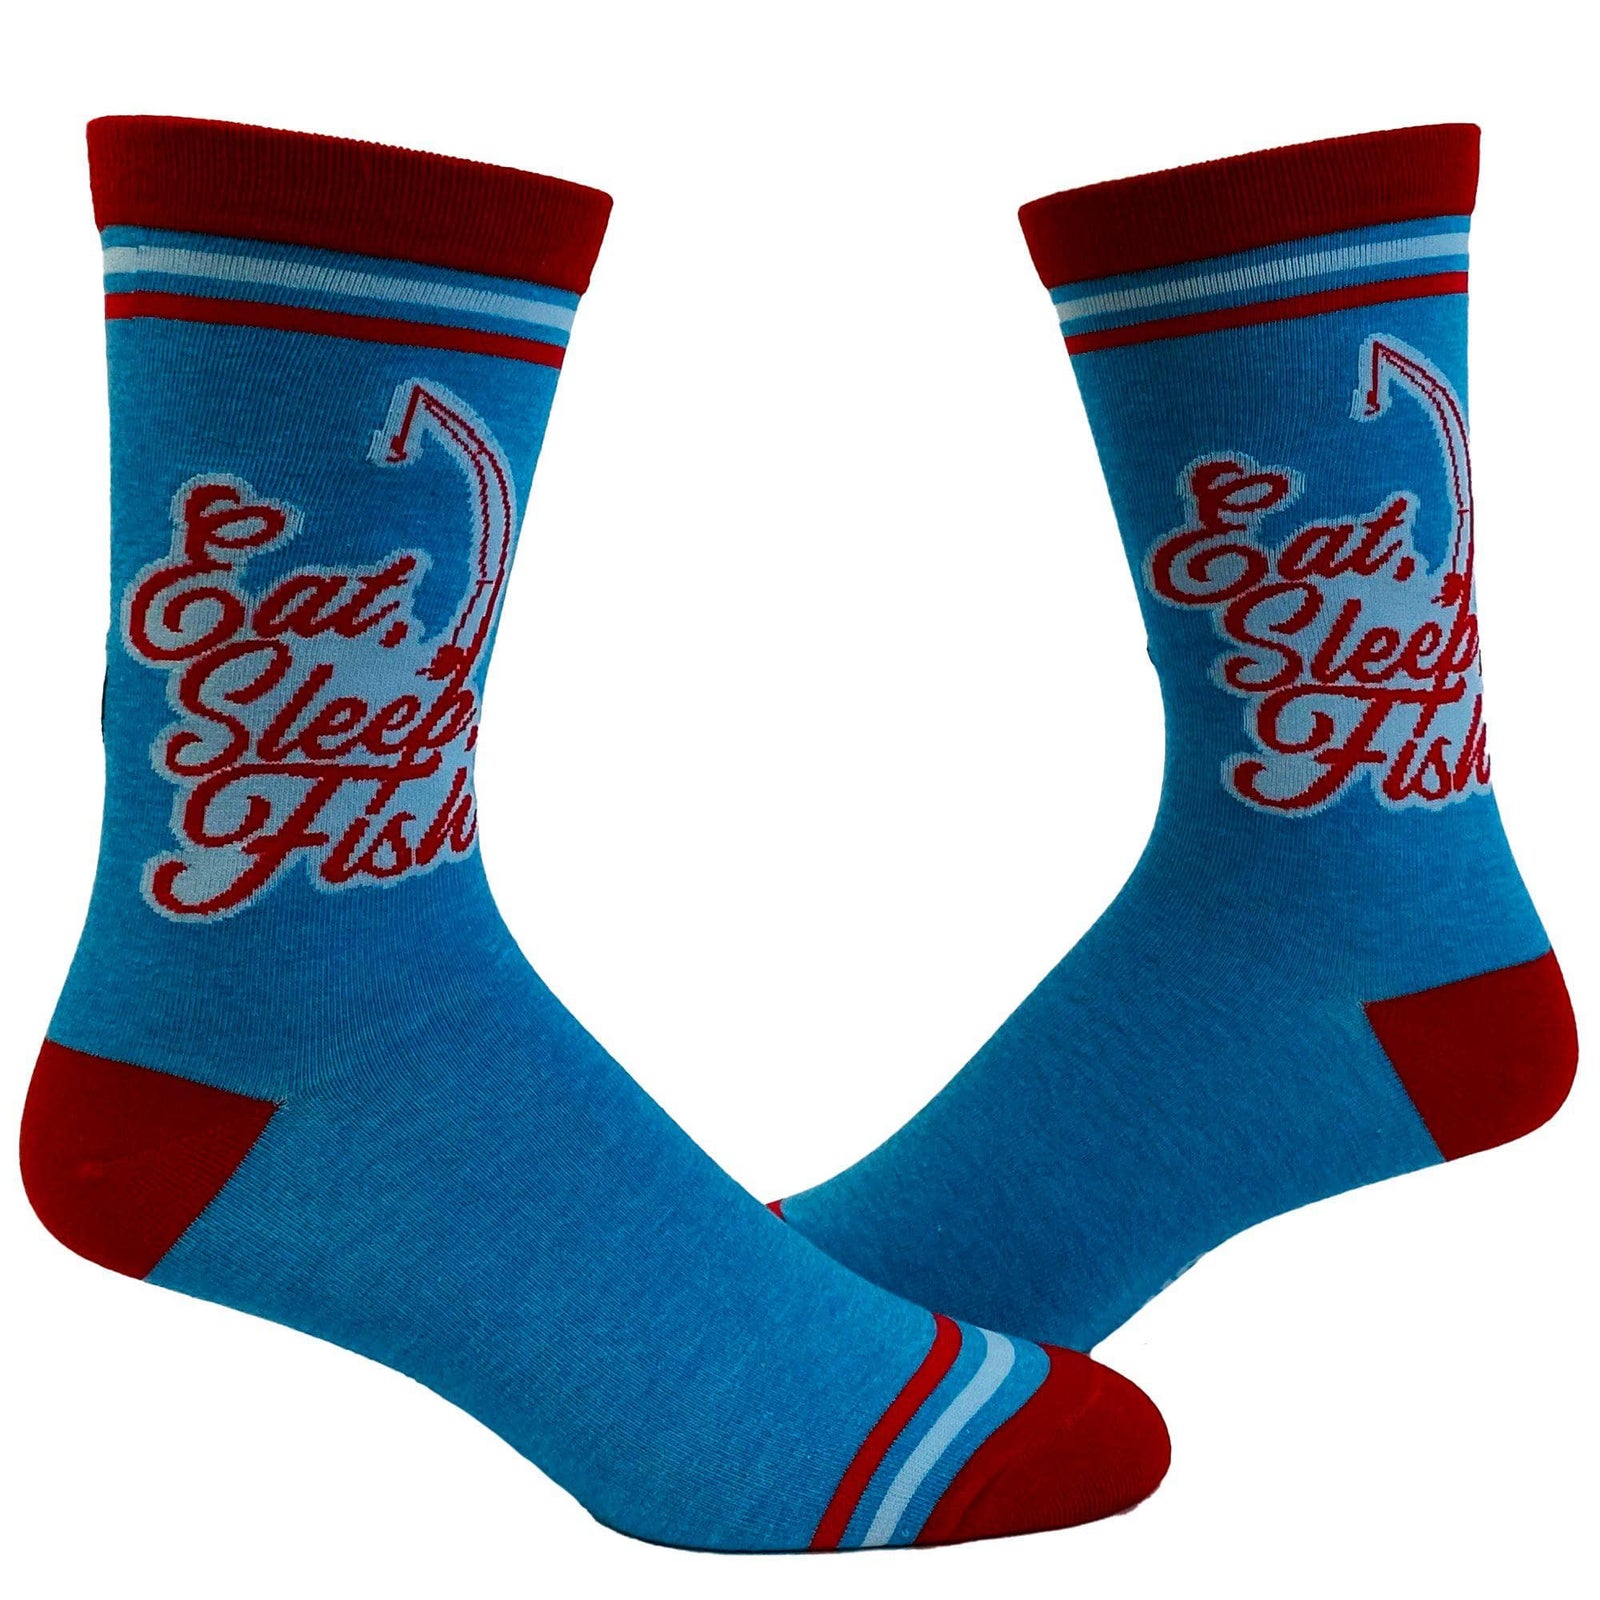 Coddies Fish Socks  Fishing Socks, Novelty Socks, Funny Socks